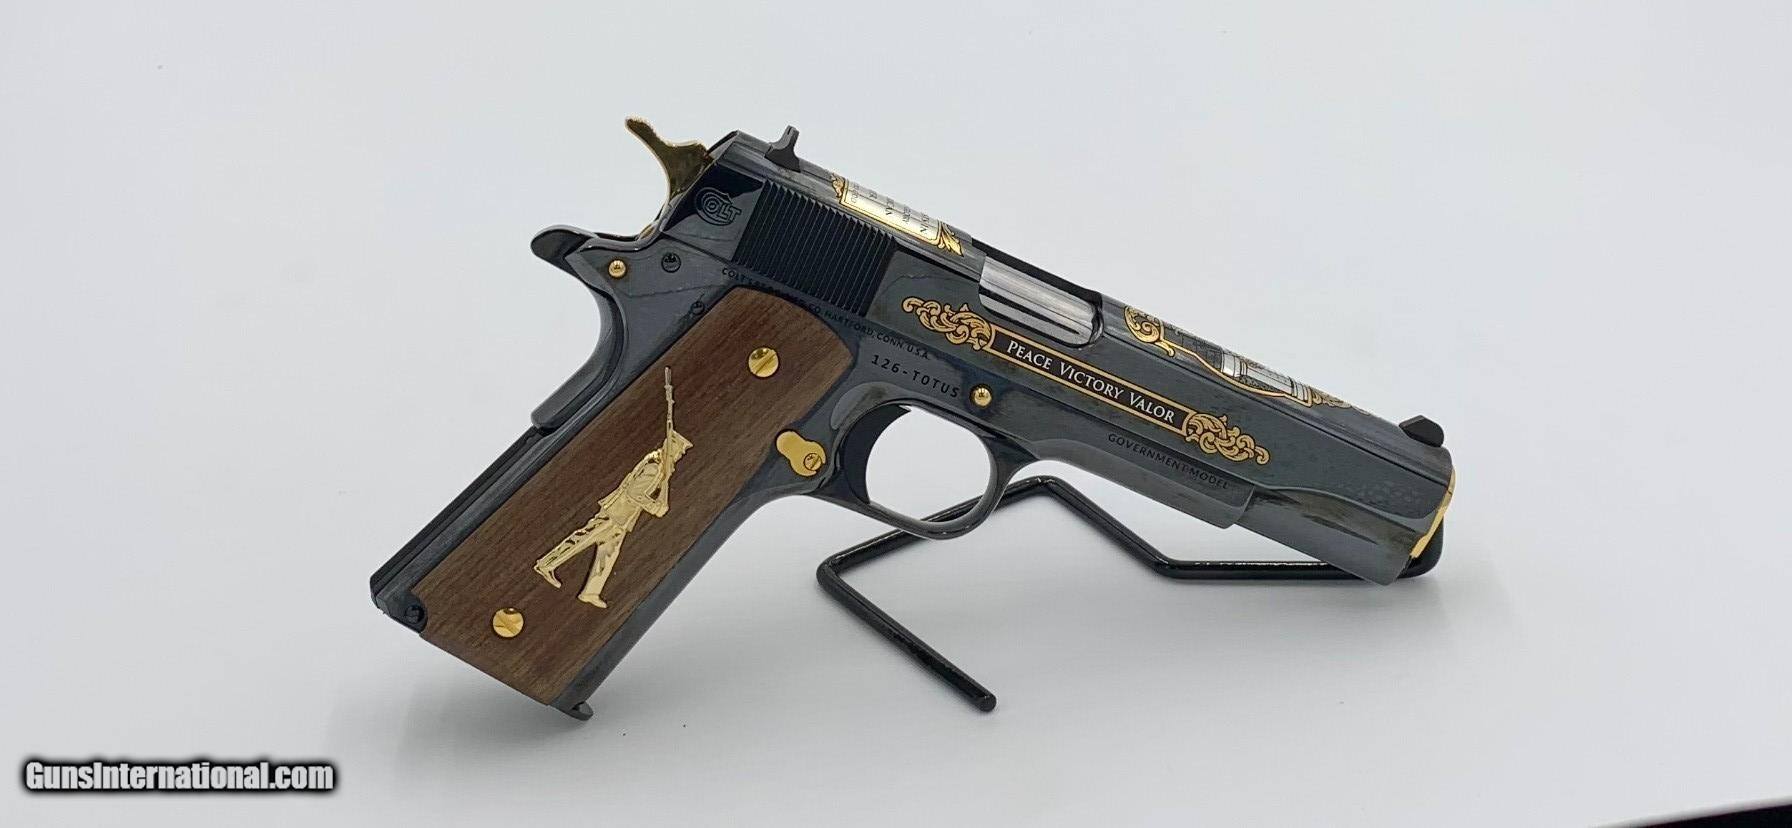 Colt 1911 Totus - For Sale - New 